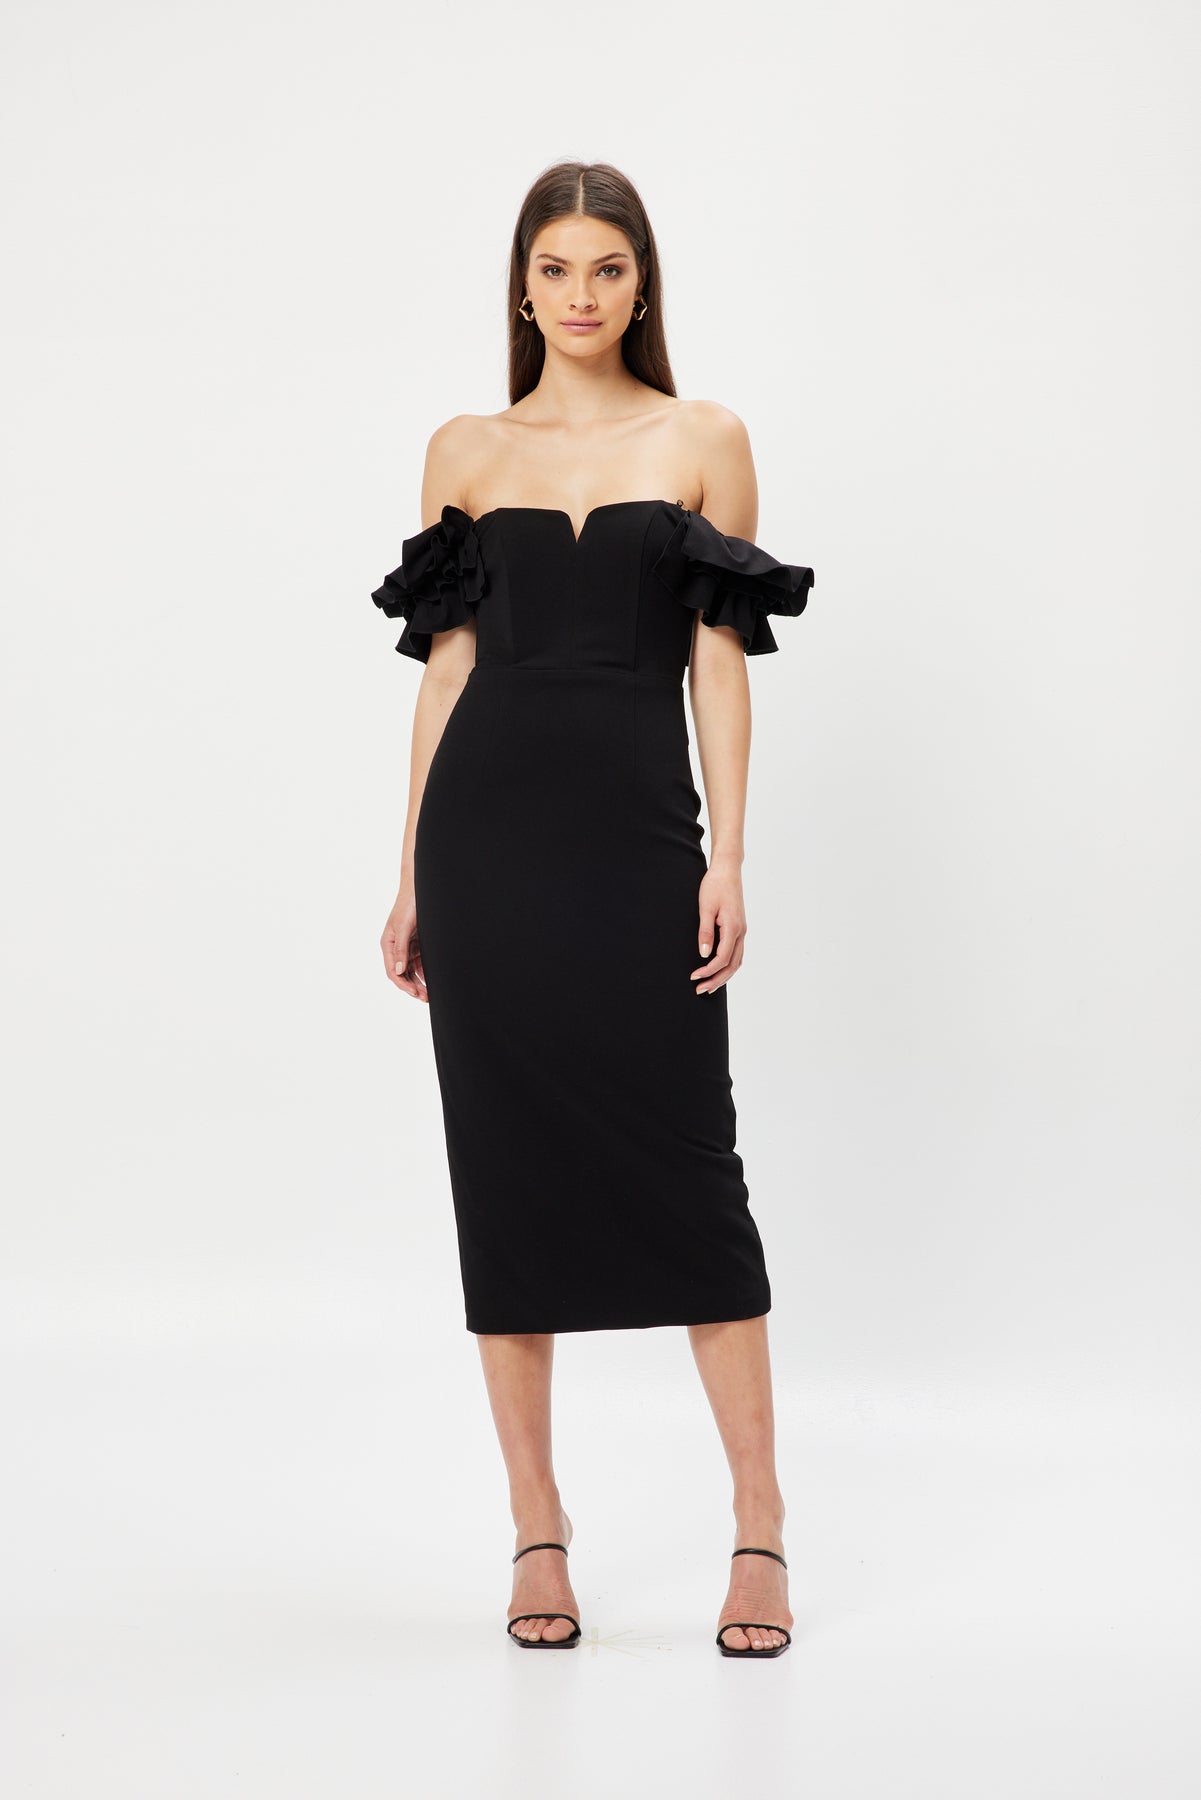 Elliatt Creole Dress - Black – Dress Hire AU